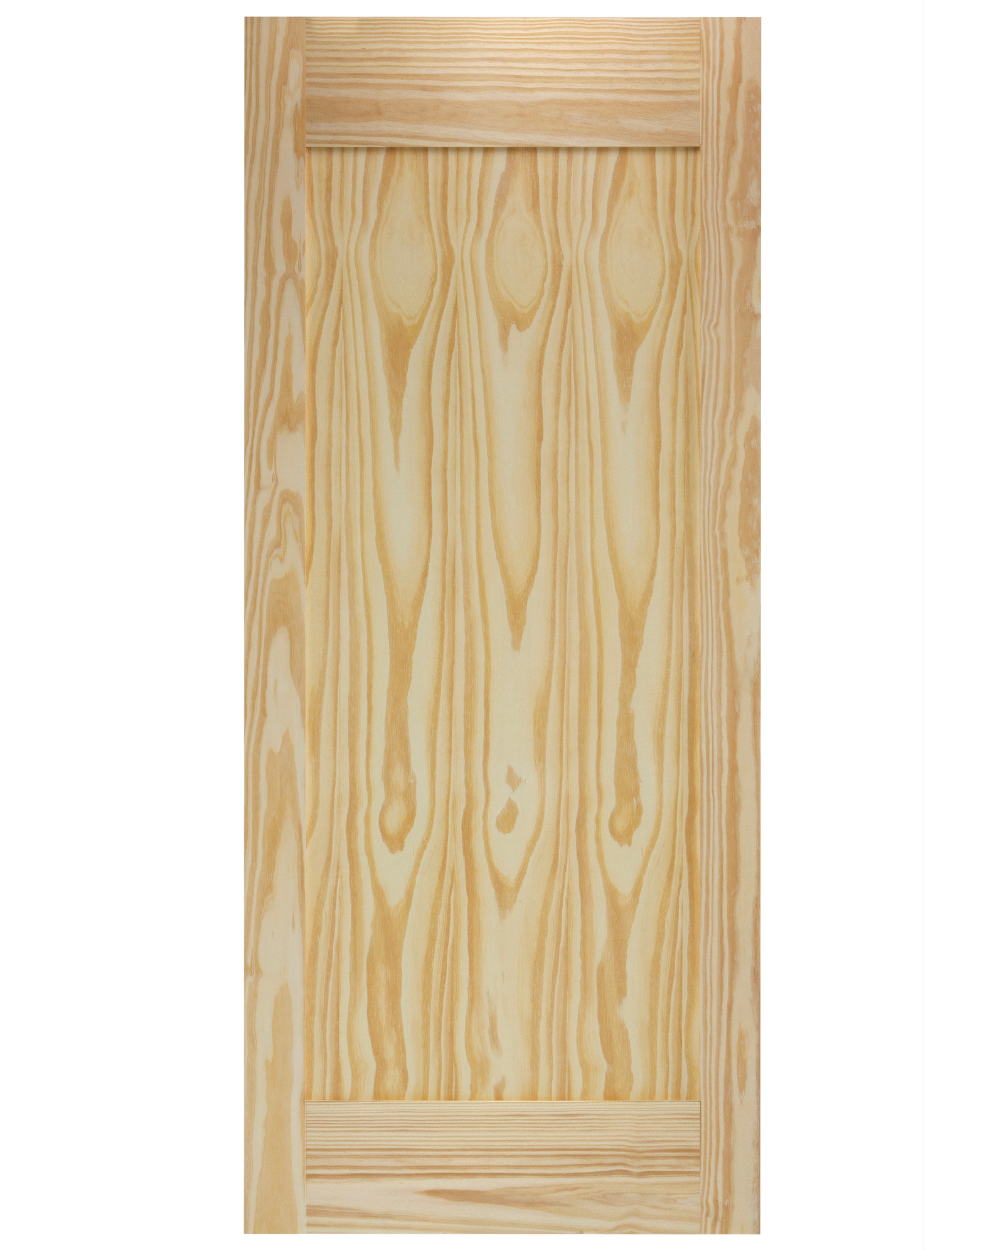 Single Panel Clear Pine Barn Door